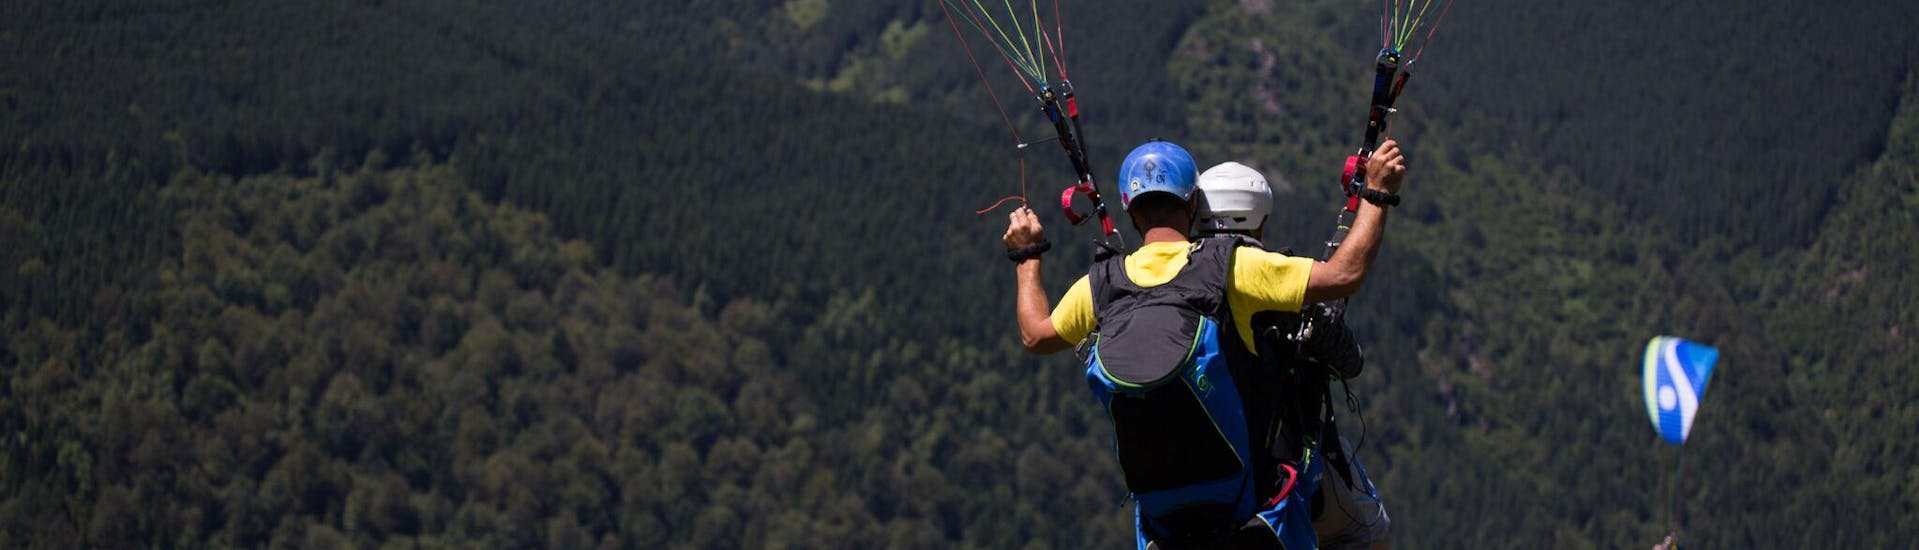 Tandem Paragliding "Voltige" - Pyrénées.